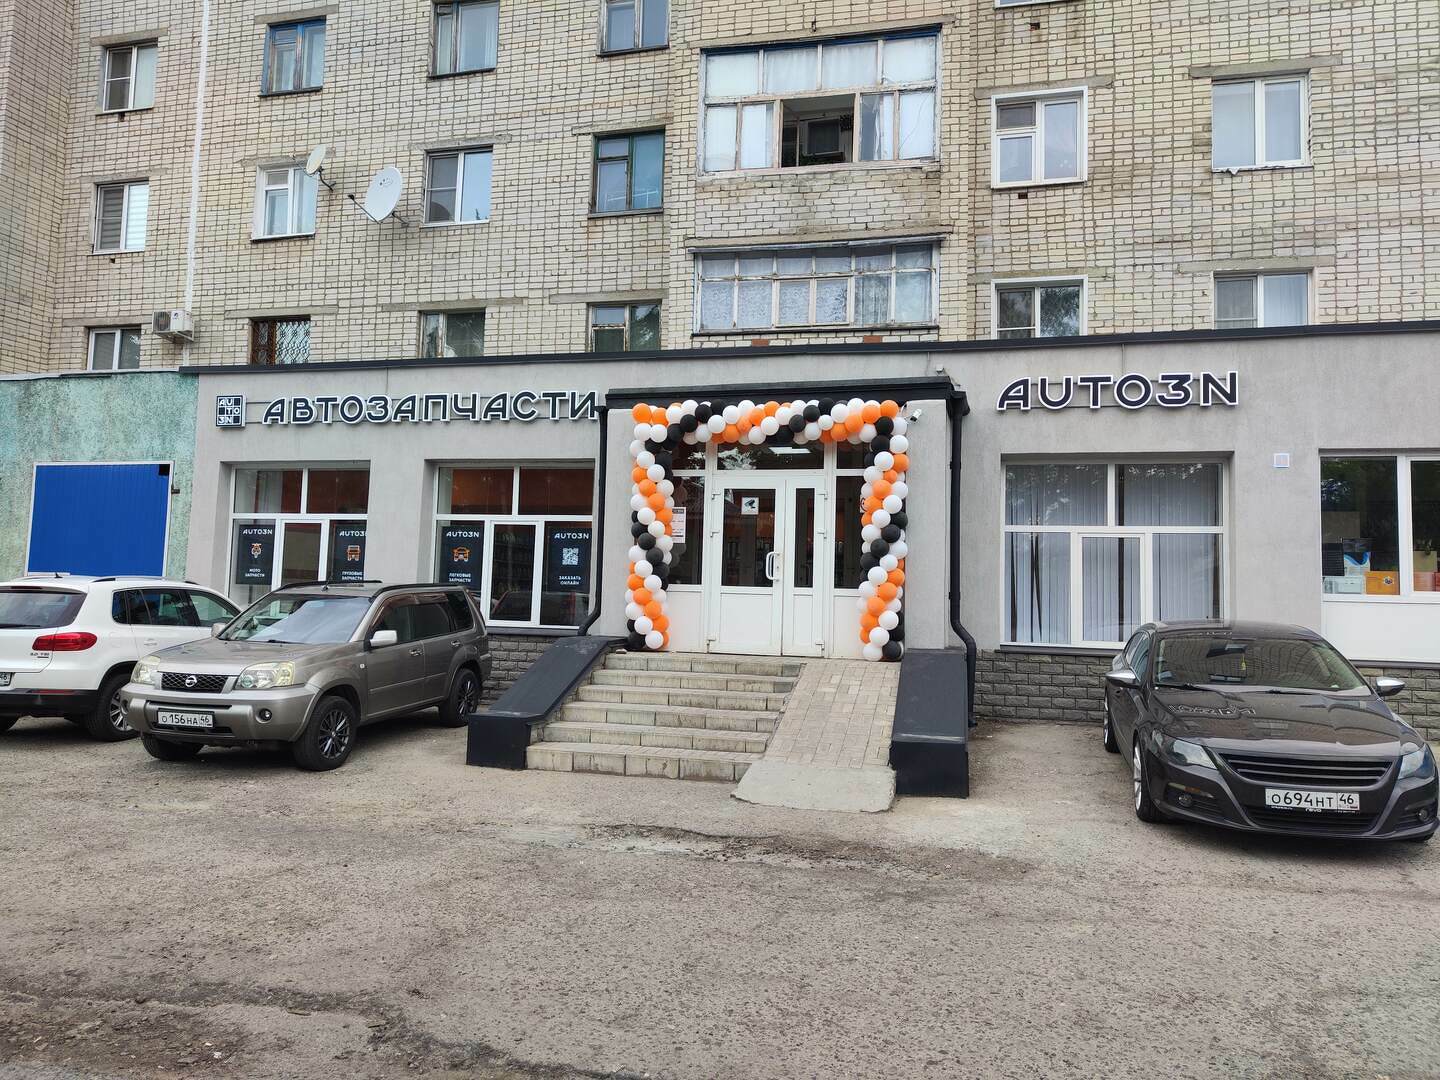 Магазин автозапчастей AUTO3N  Курск «ул. Аэродромная»